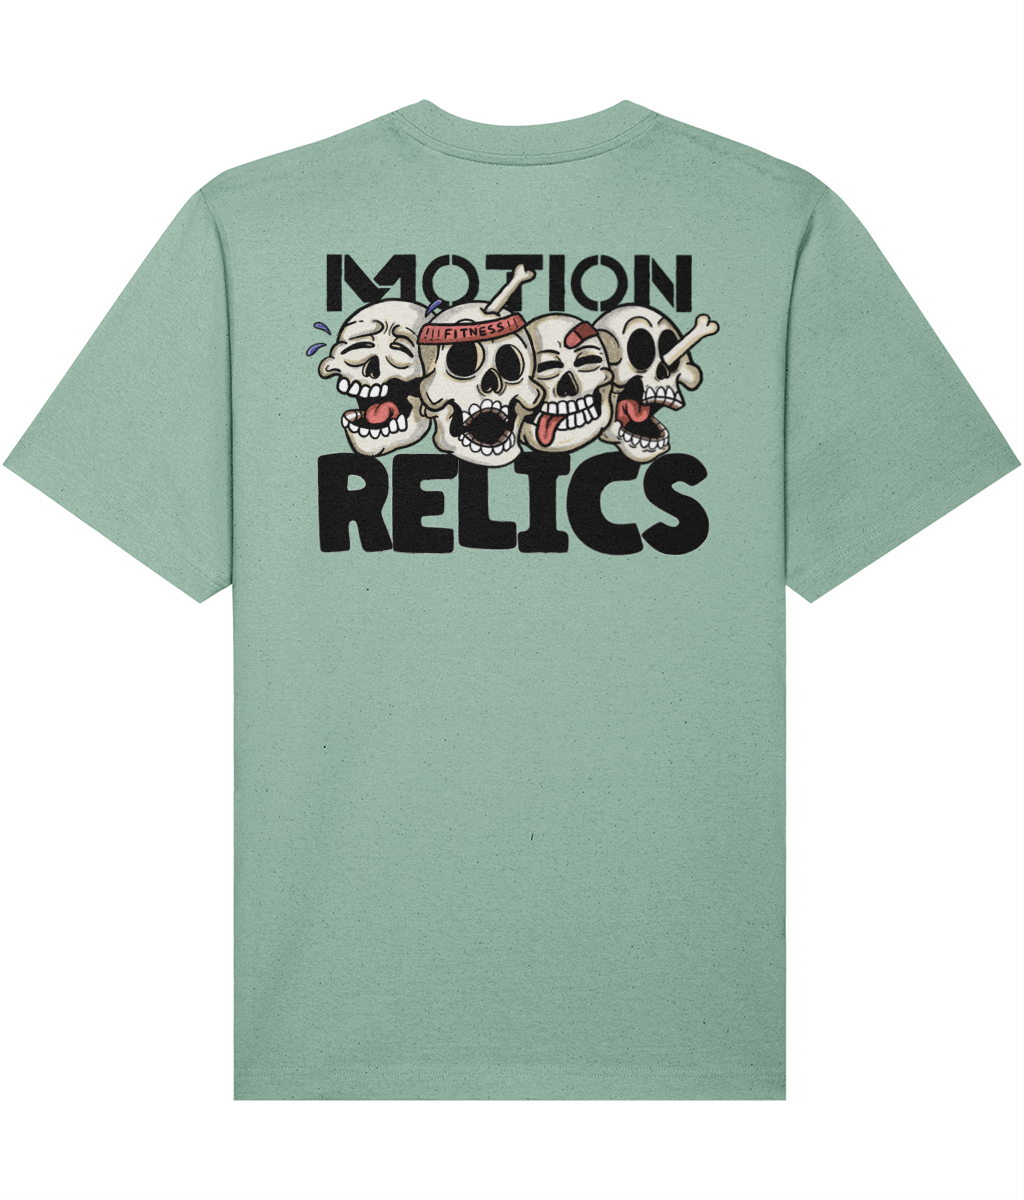 Motion relics oversized t-shirt - Motion training